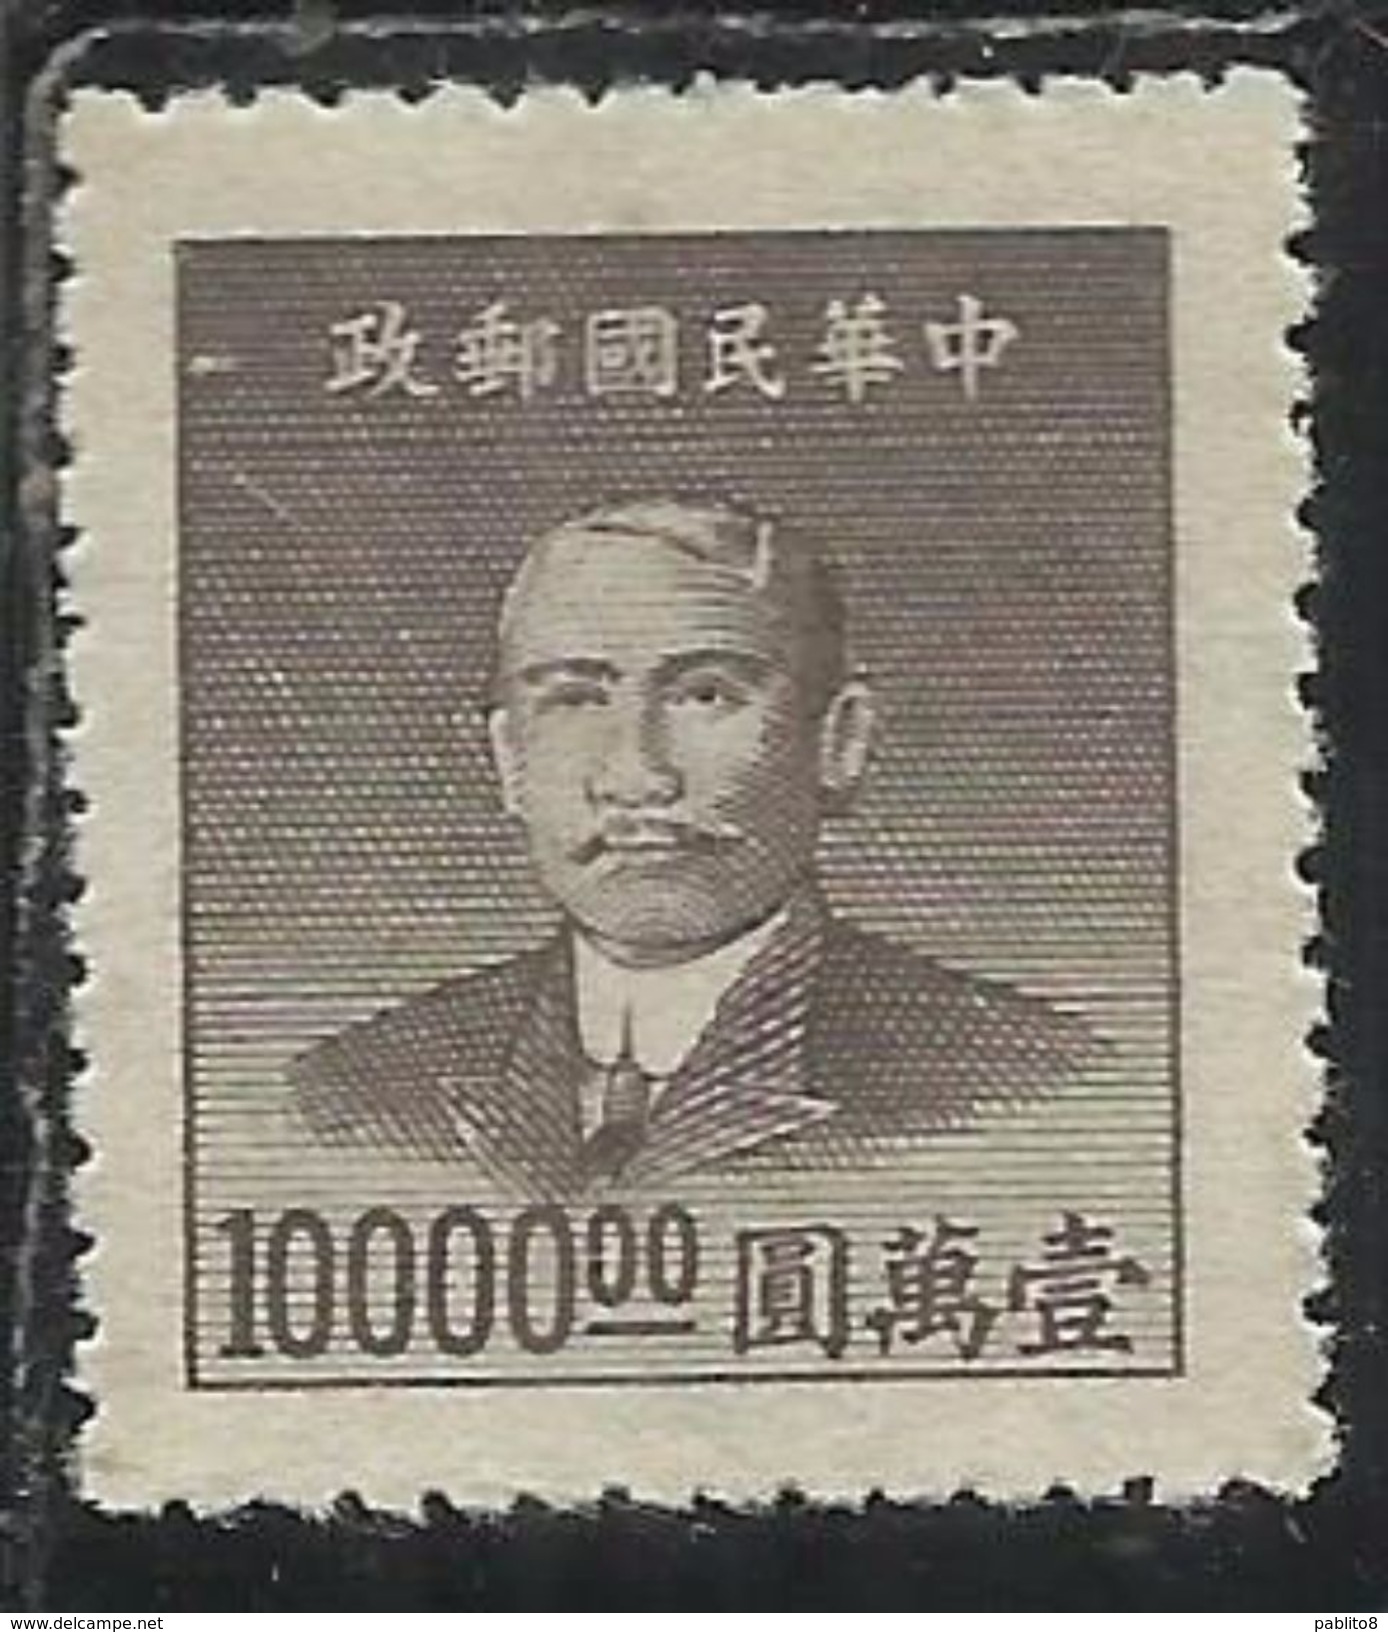 CHINA CINA 1949 Dr Sun Yat-sen 10000$ NG - 1912-1949 République